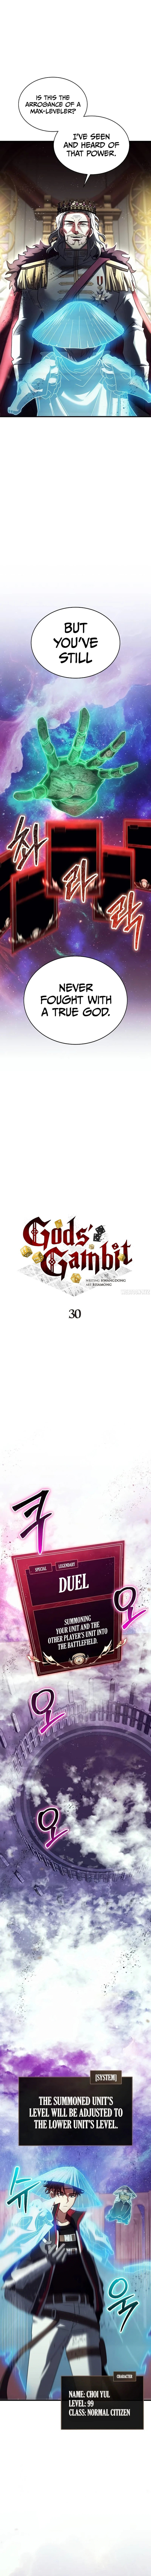 gods-gambit-chap-30-3